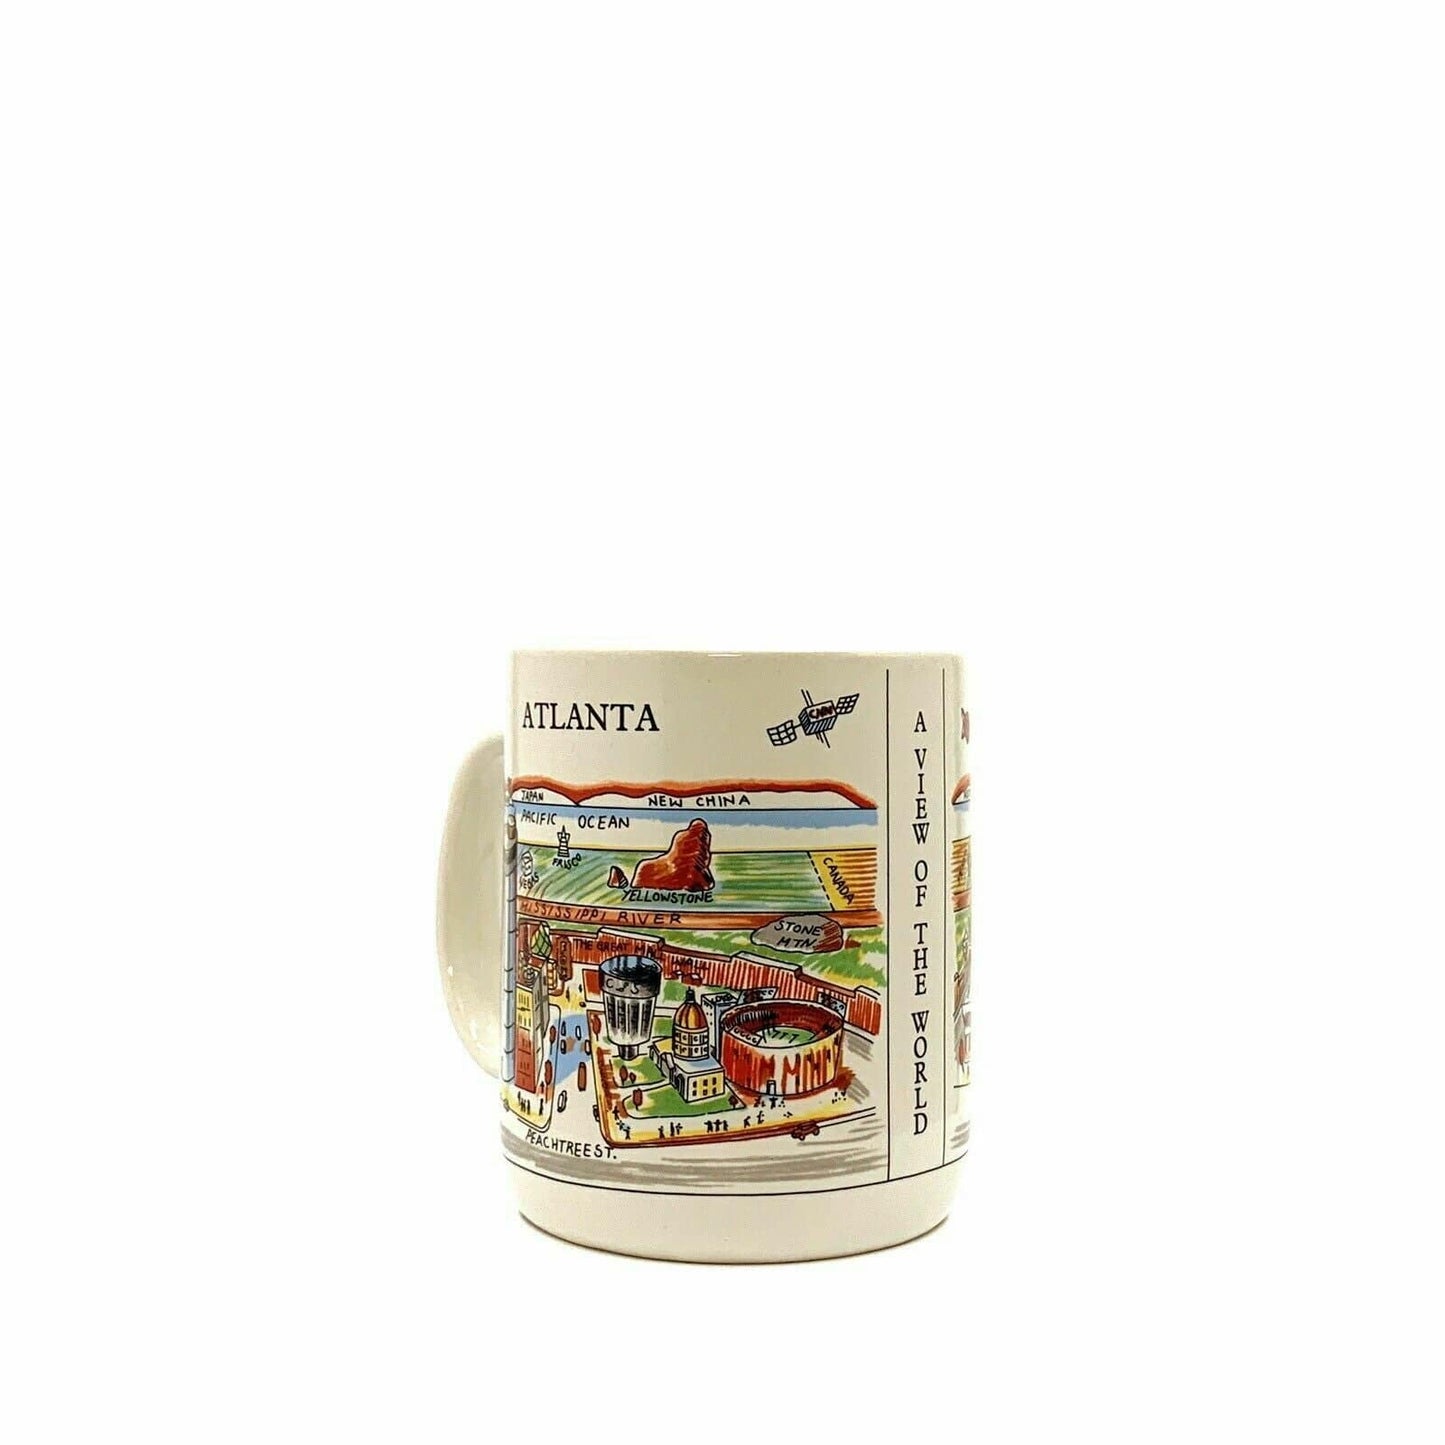 Captivating City Merchandise View Of The World Ceramic Souvenir Coffee Cup Mug - 14oz White Atlanta